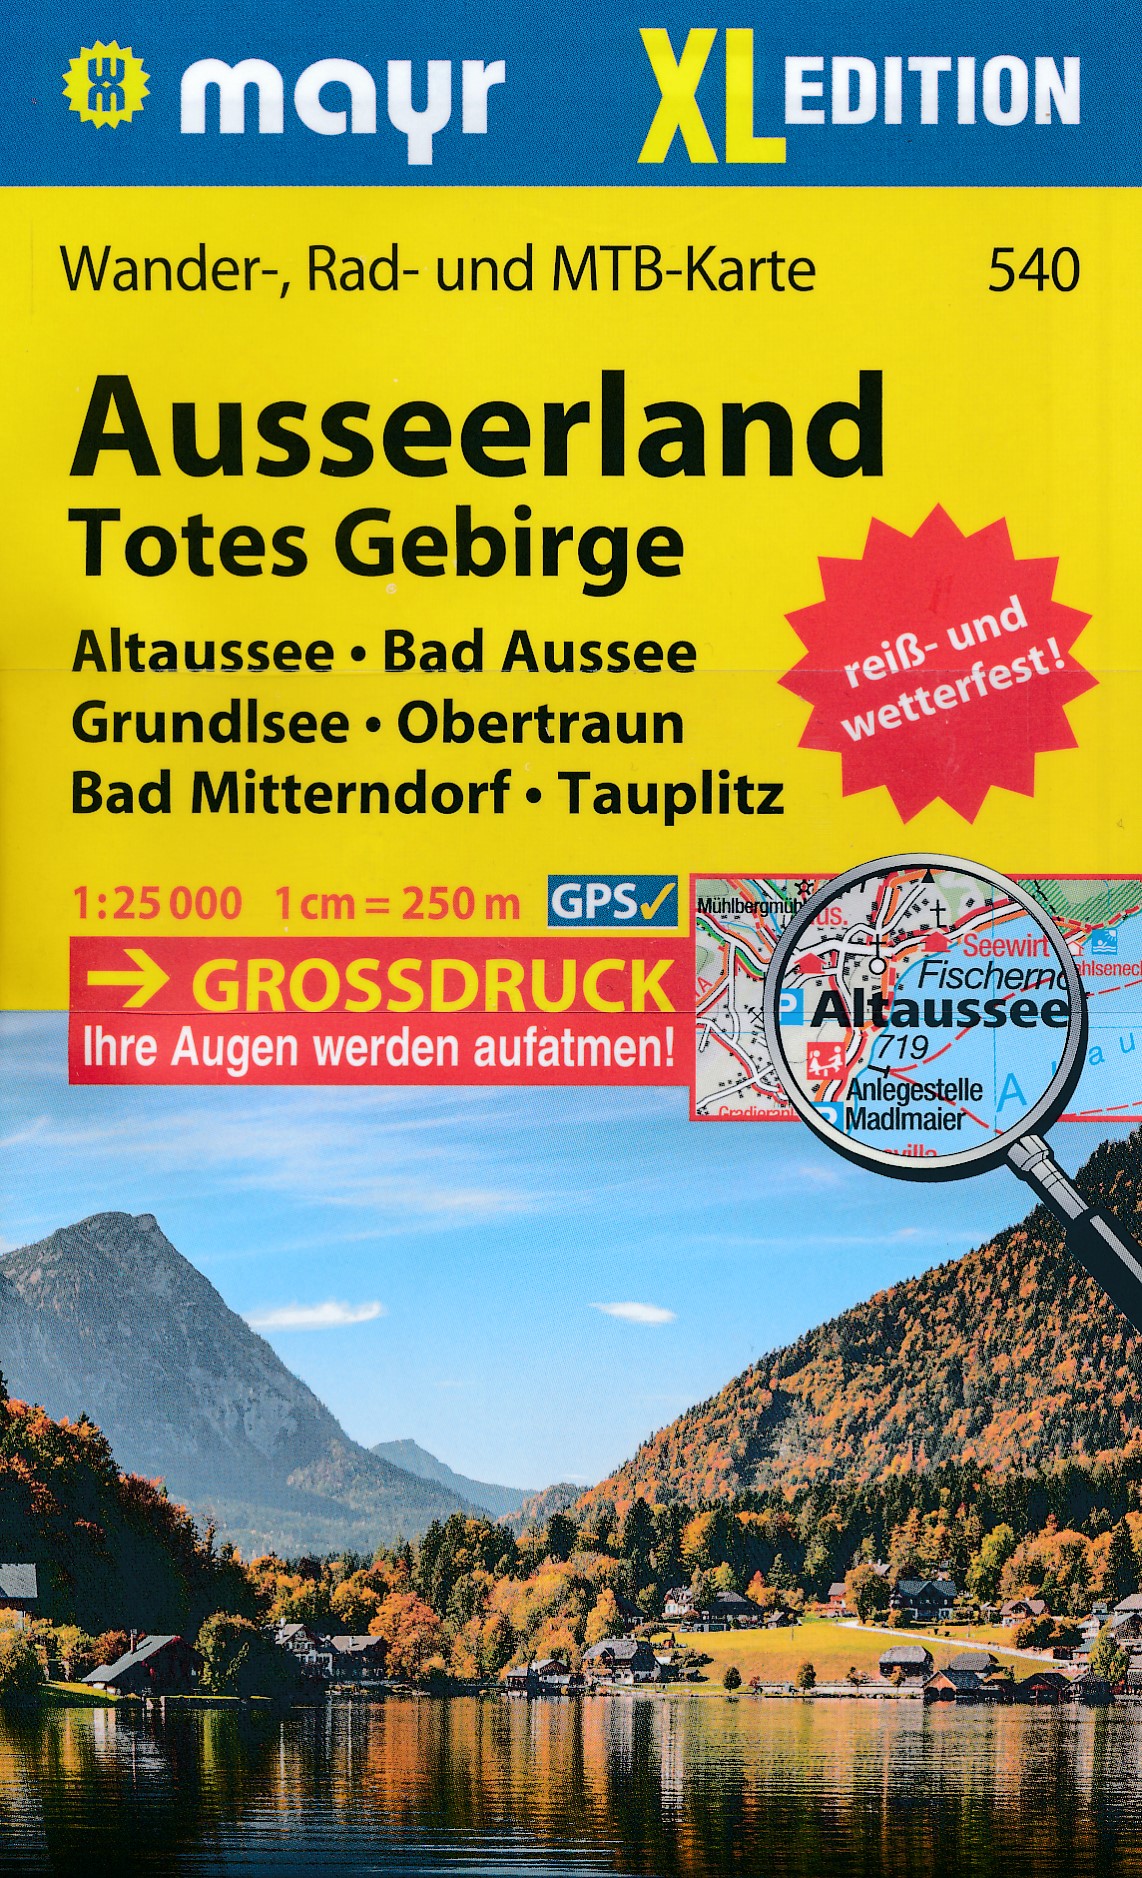 Online bestellen: Wandelkaart 540 XL Ausseerland - Totes Gebirge | Mayr